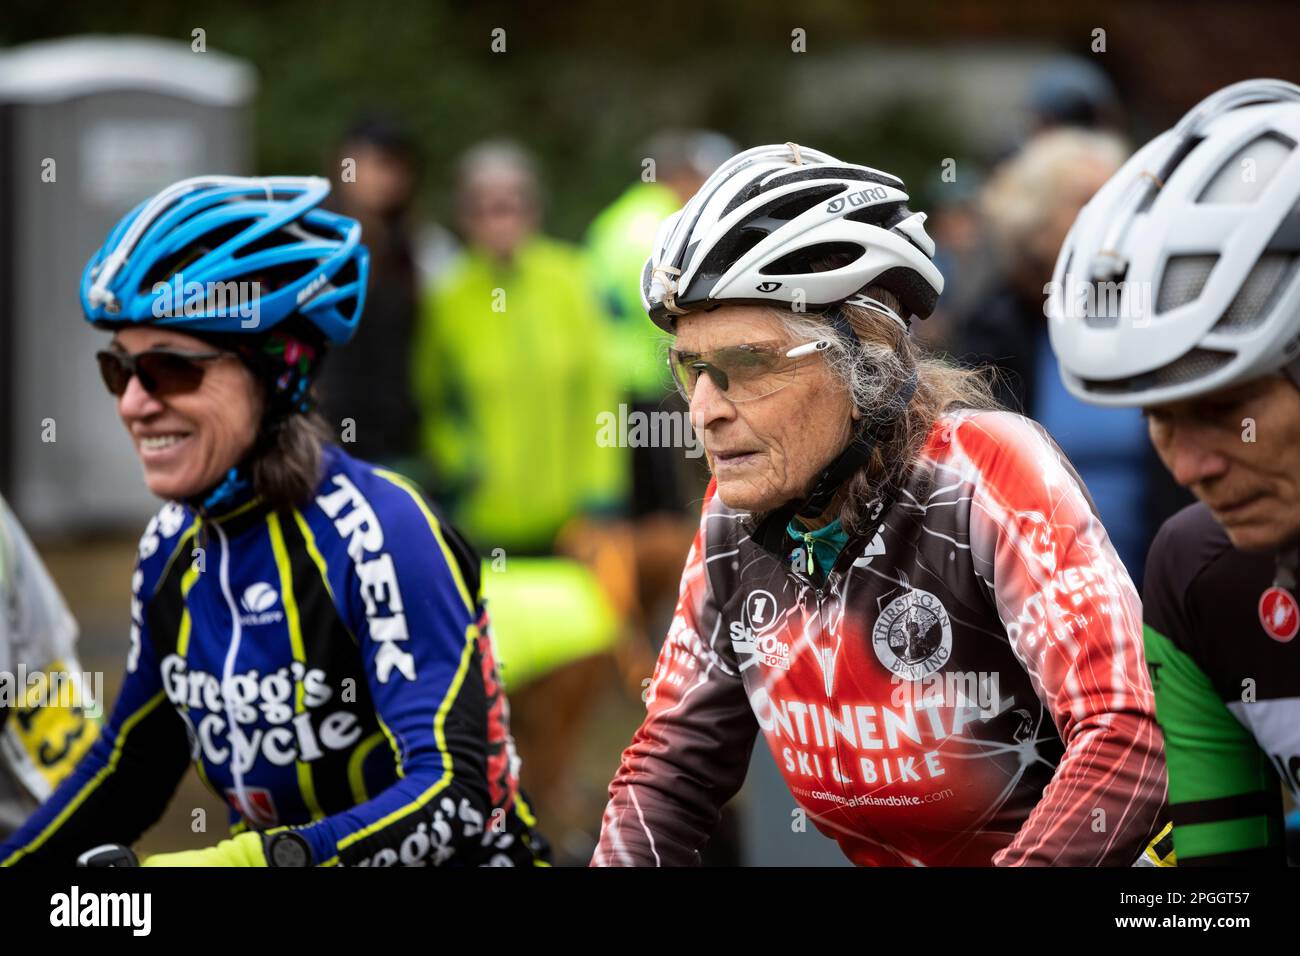 WA24073-00....Washington - Seniorenbürgerin Vicky Spring (69) nimmt an einem Cyclocross-Rennen in West-Washington Teil. Vicky in Rot. Stockfoto